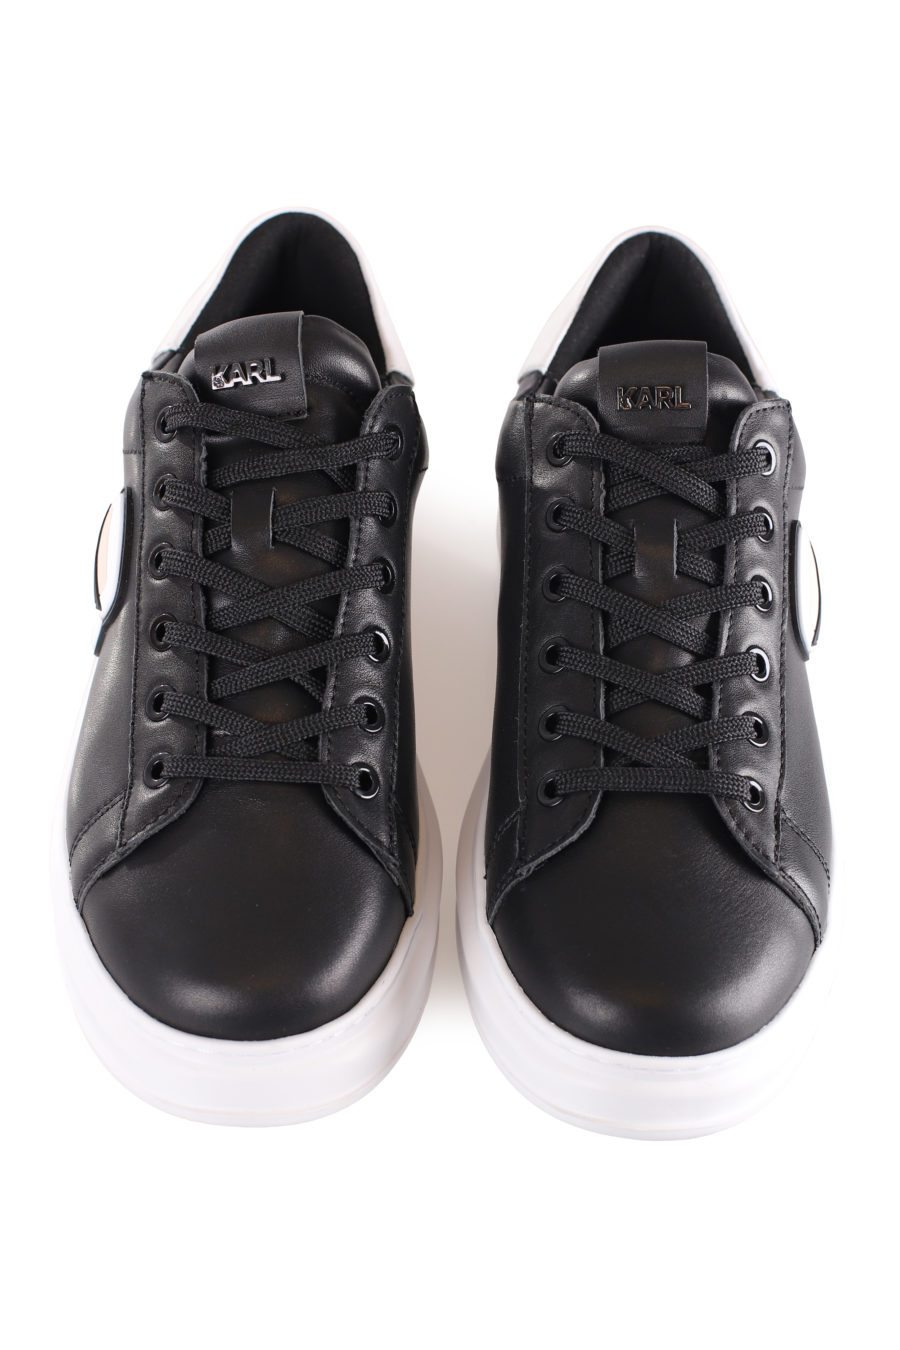 Zapatillas negras con logo "karl" en goma - IMG 9604